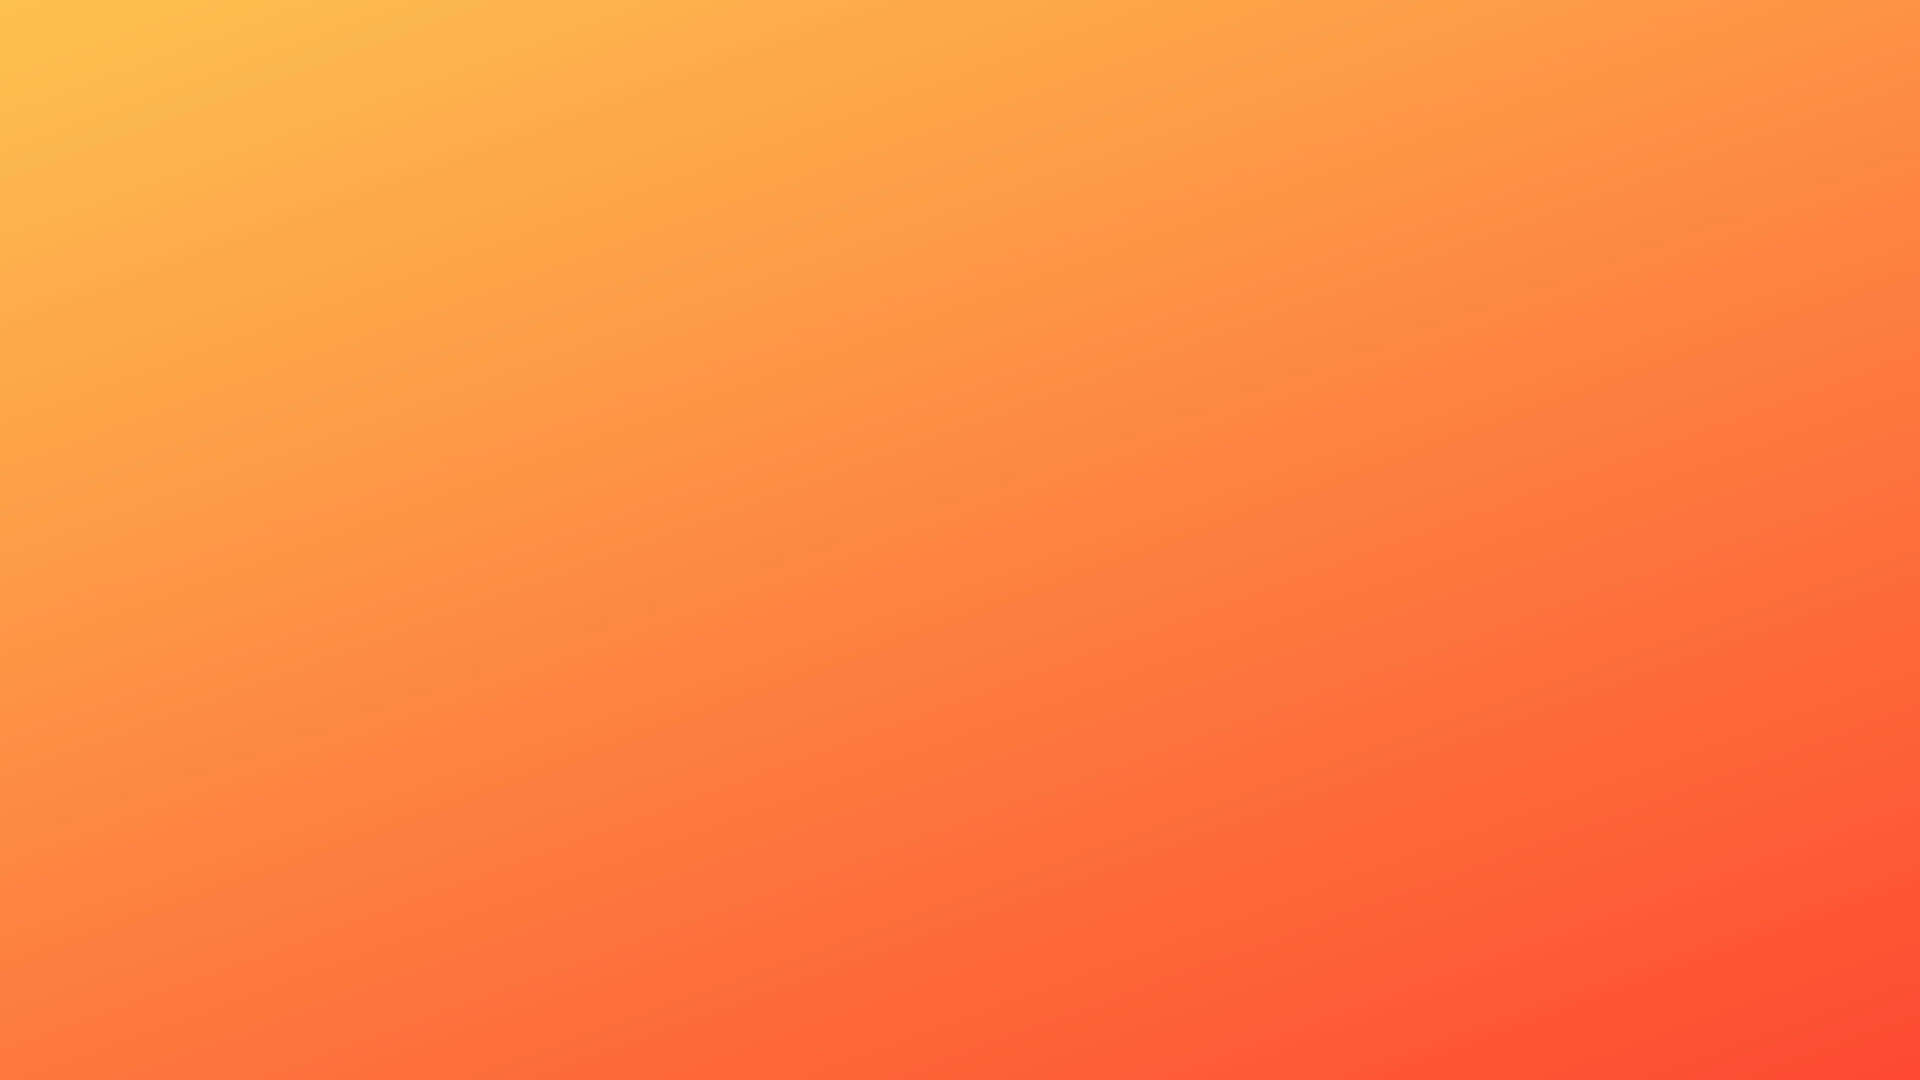 A beautiful orange gradient background